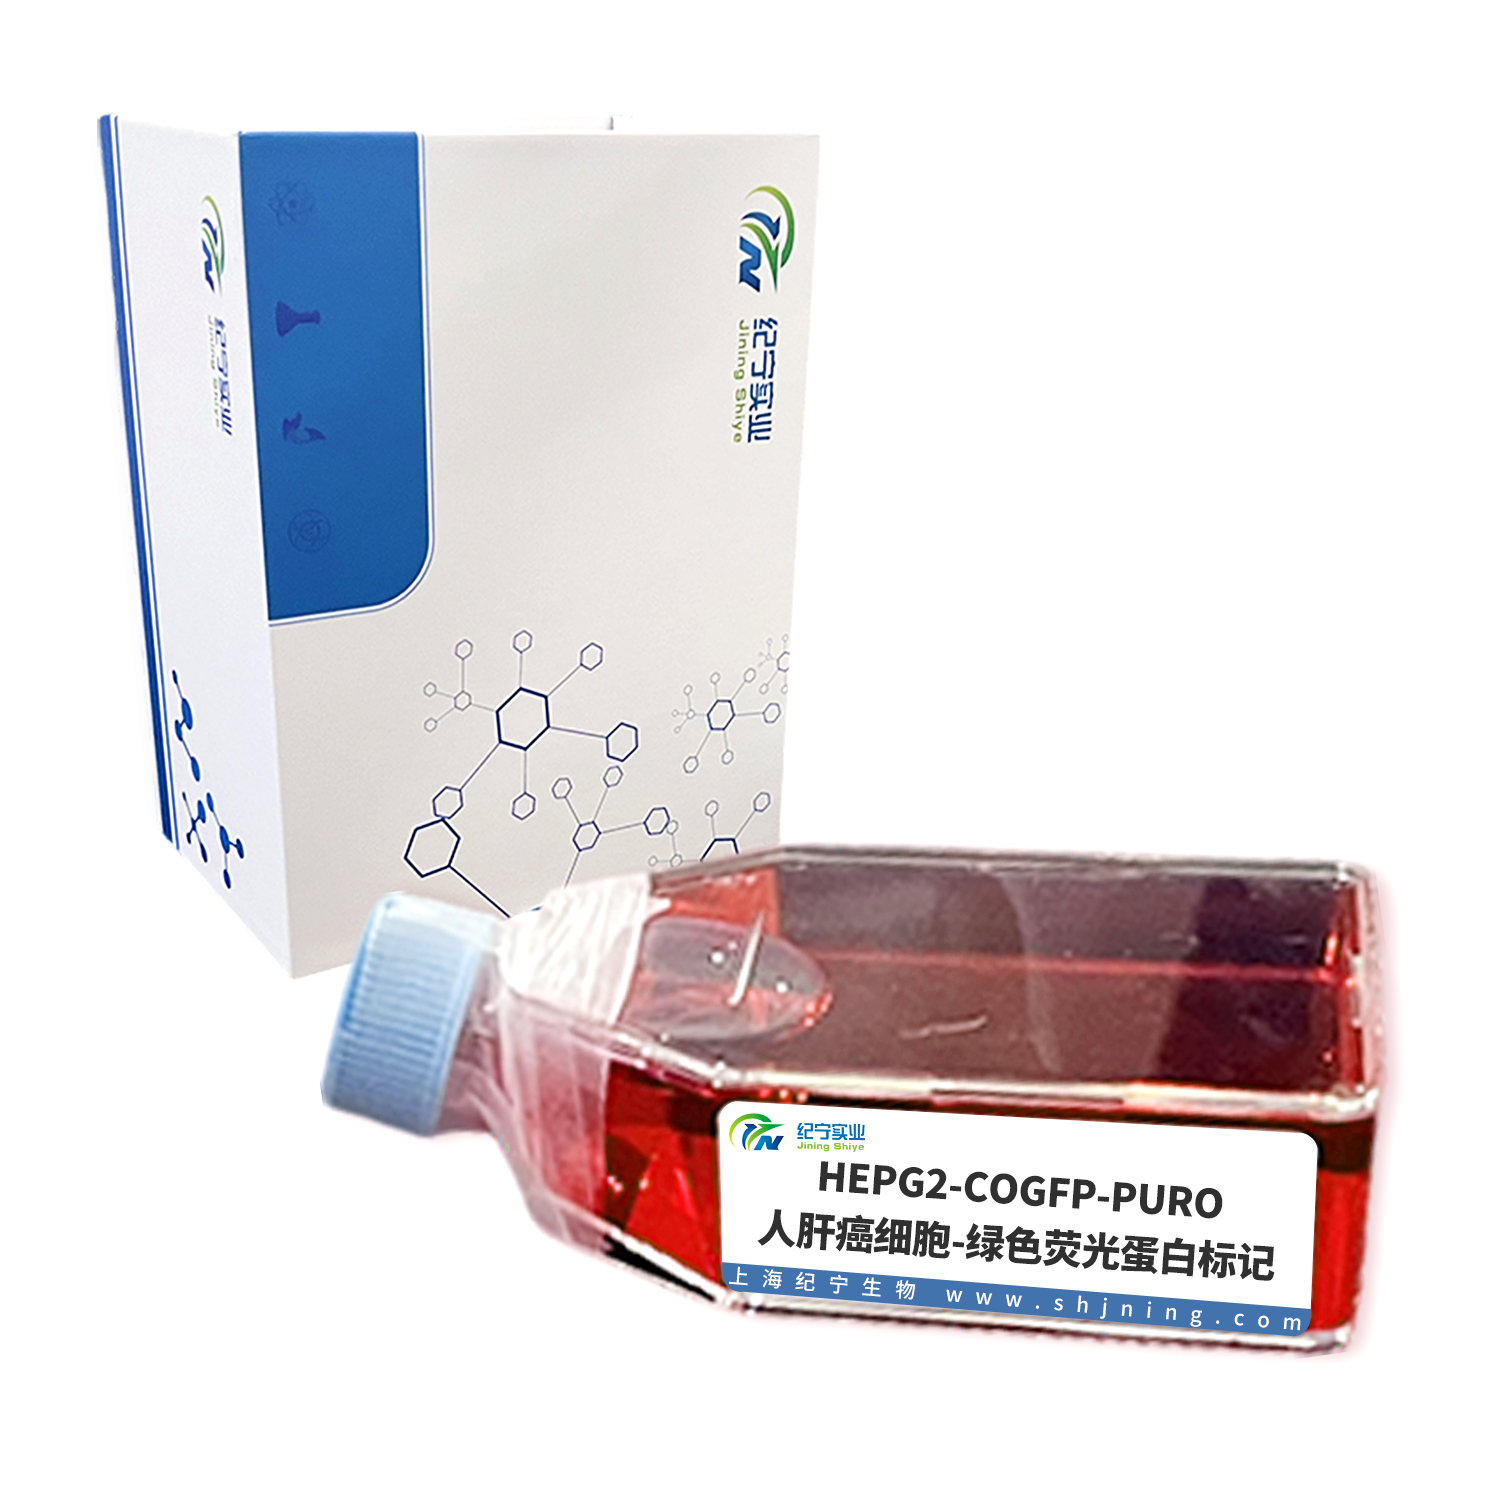 HEPG2-COGFP-PURO/人肝癌细胞-绿色荧光蛋白标记